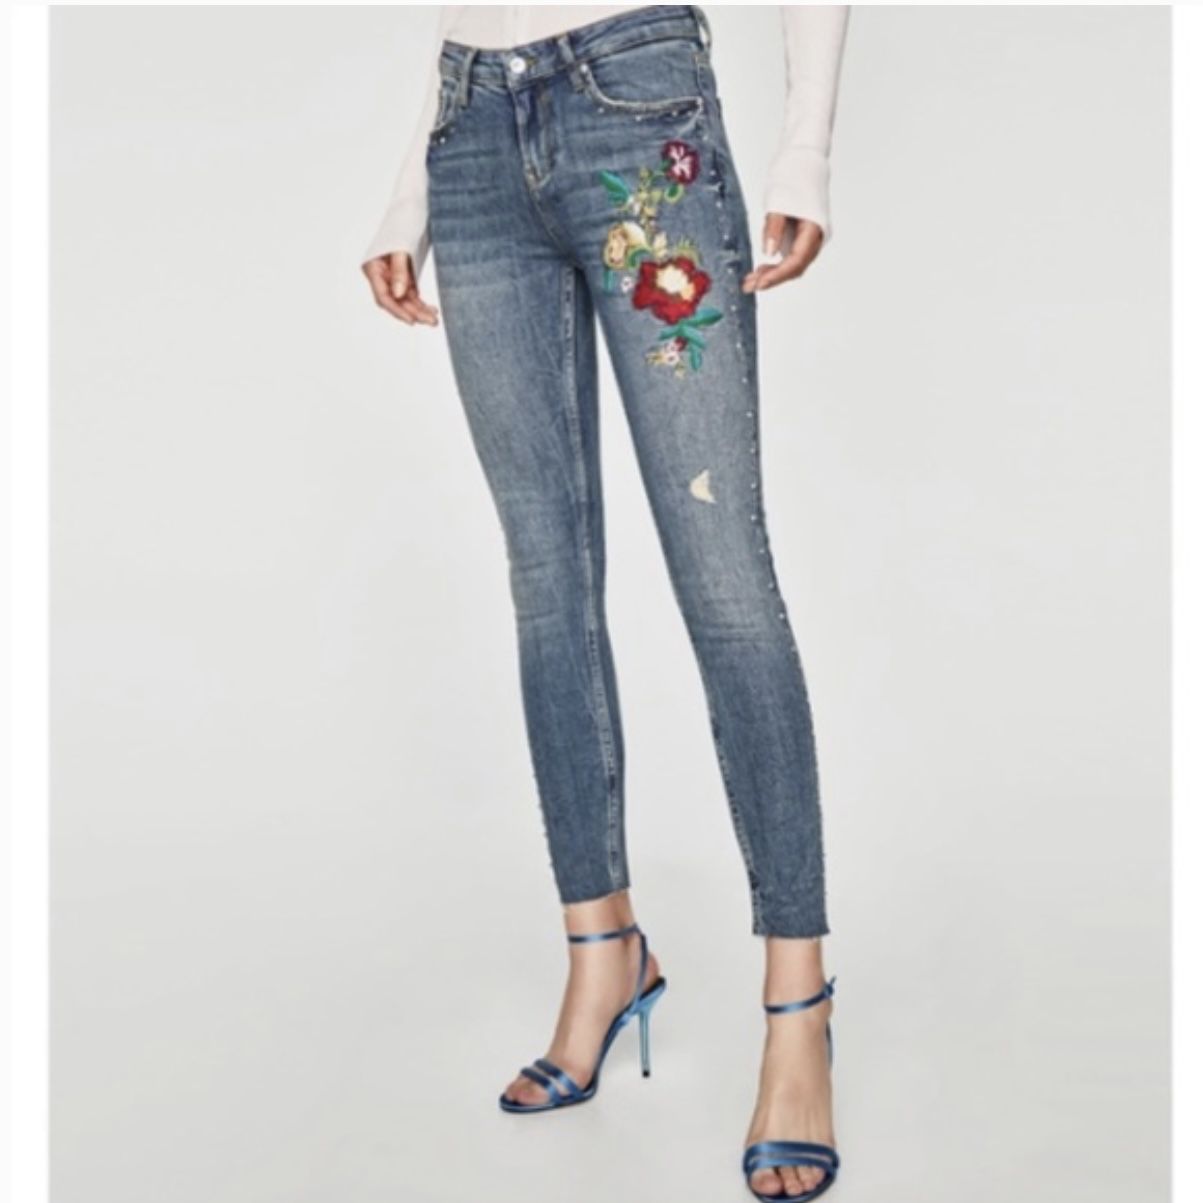 ZARA Light Wash Denim Floral Rose Embroidered Studded Raw Hem Skinny Jeans NEW